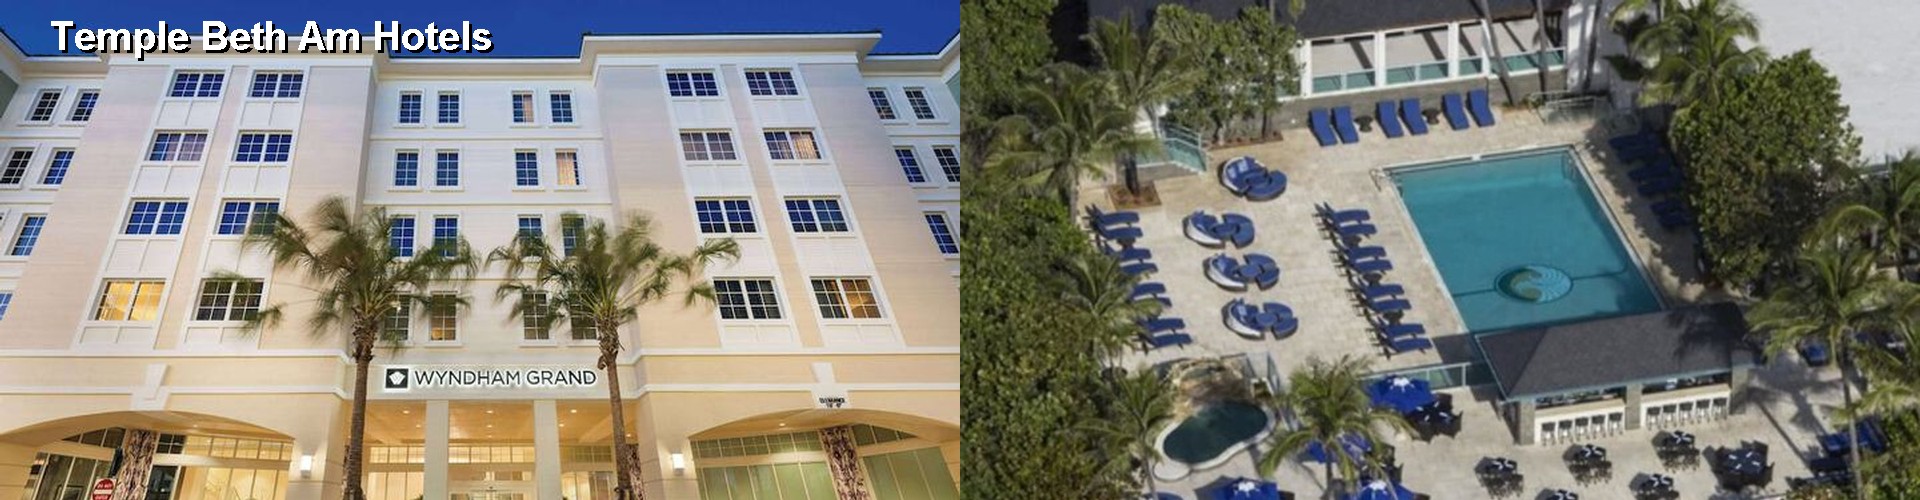 5 Best Hotels near Temple Beth Am